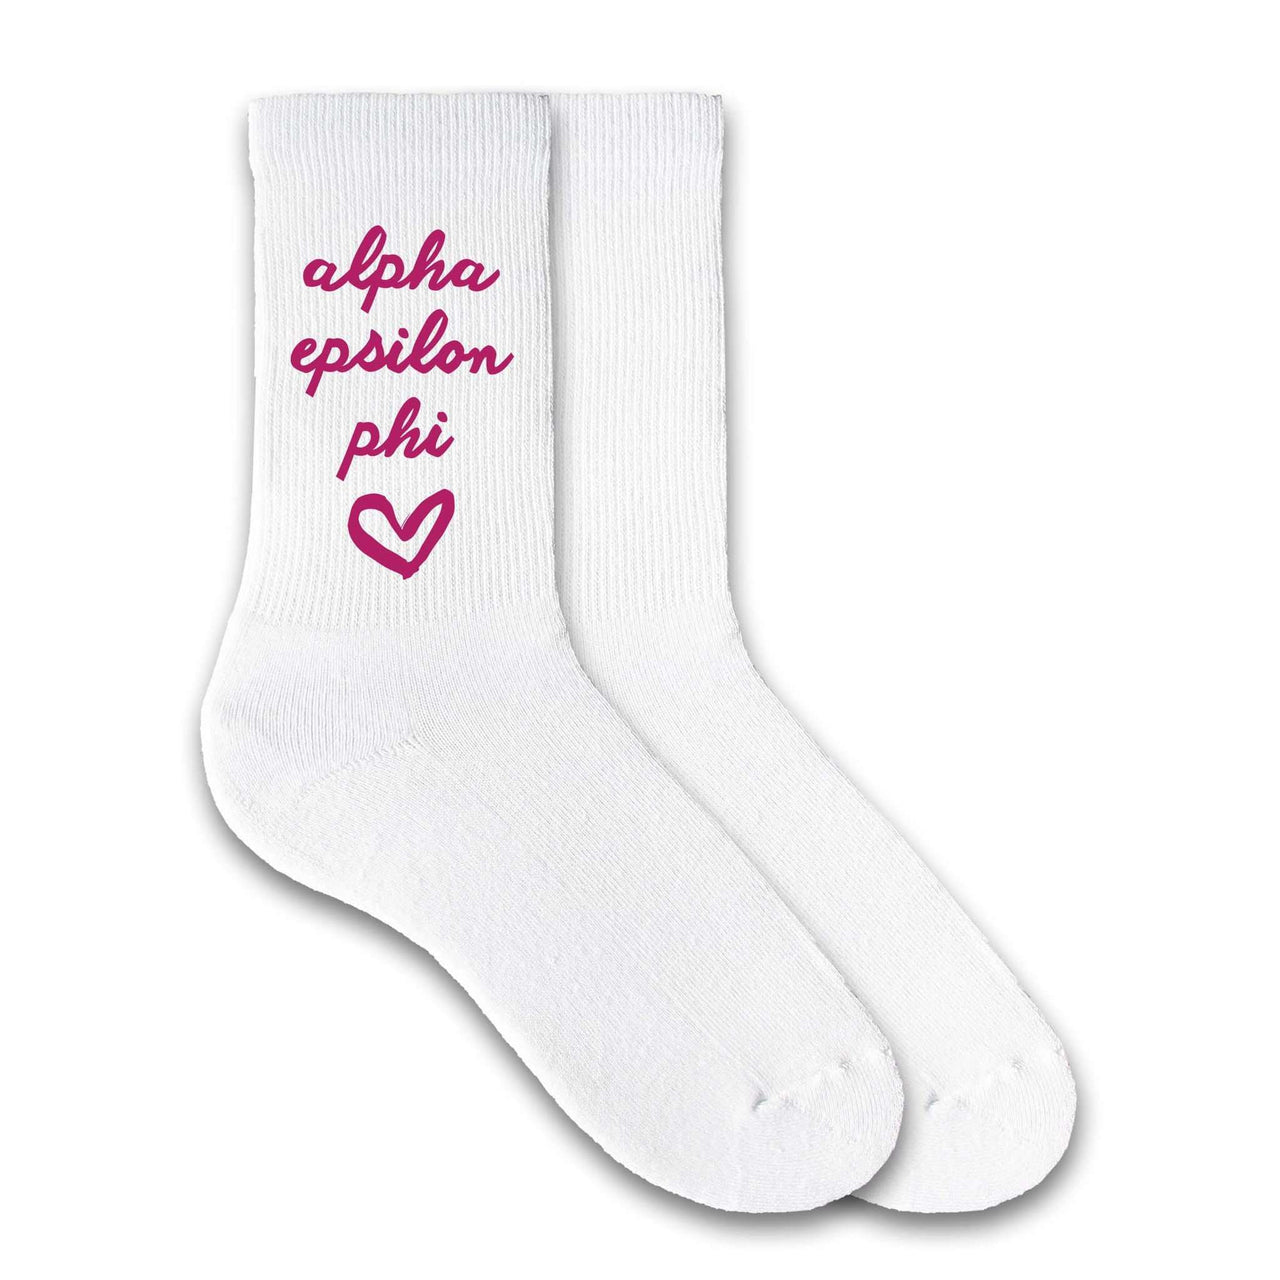 Alpha Epsilon Phi sorority name with heart custom printed on white cotton crew socks.